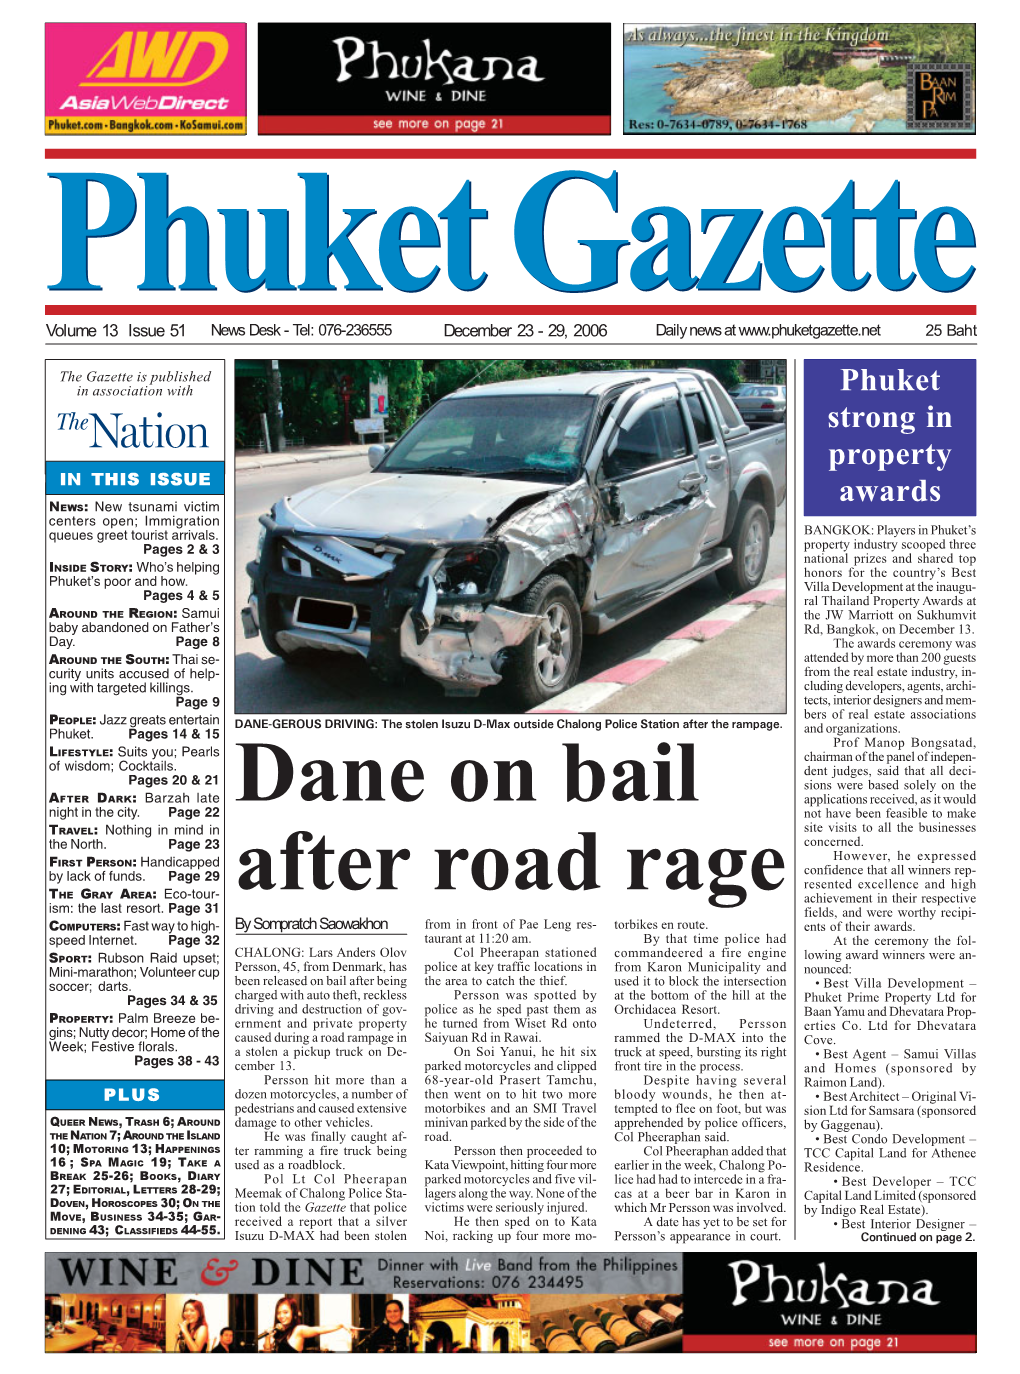 Phuket Strong in Property Awards